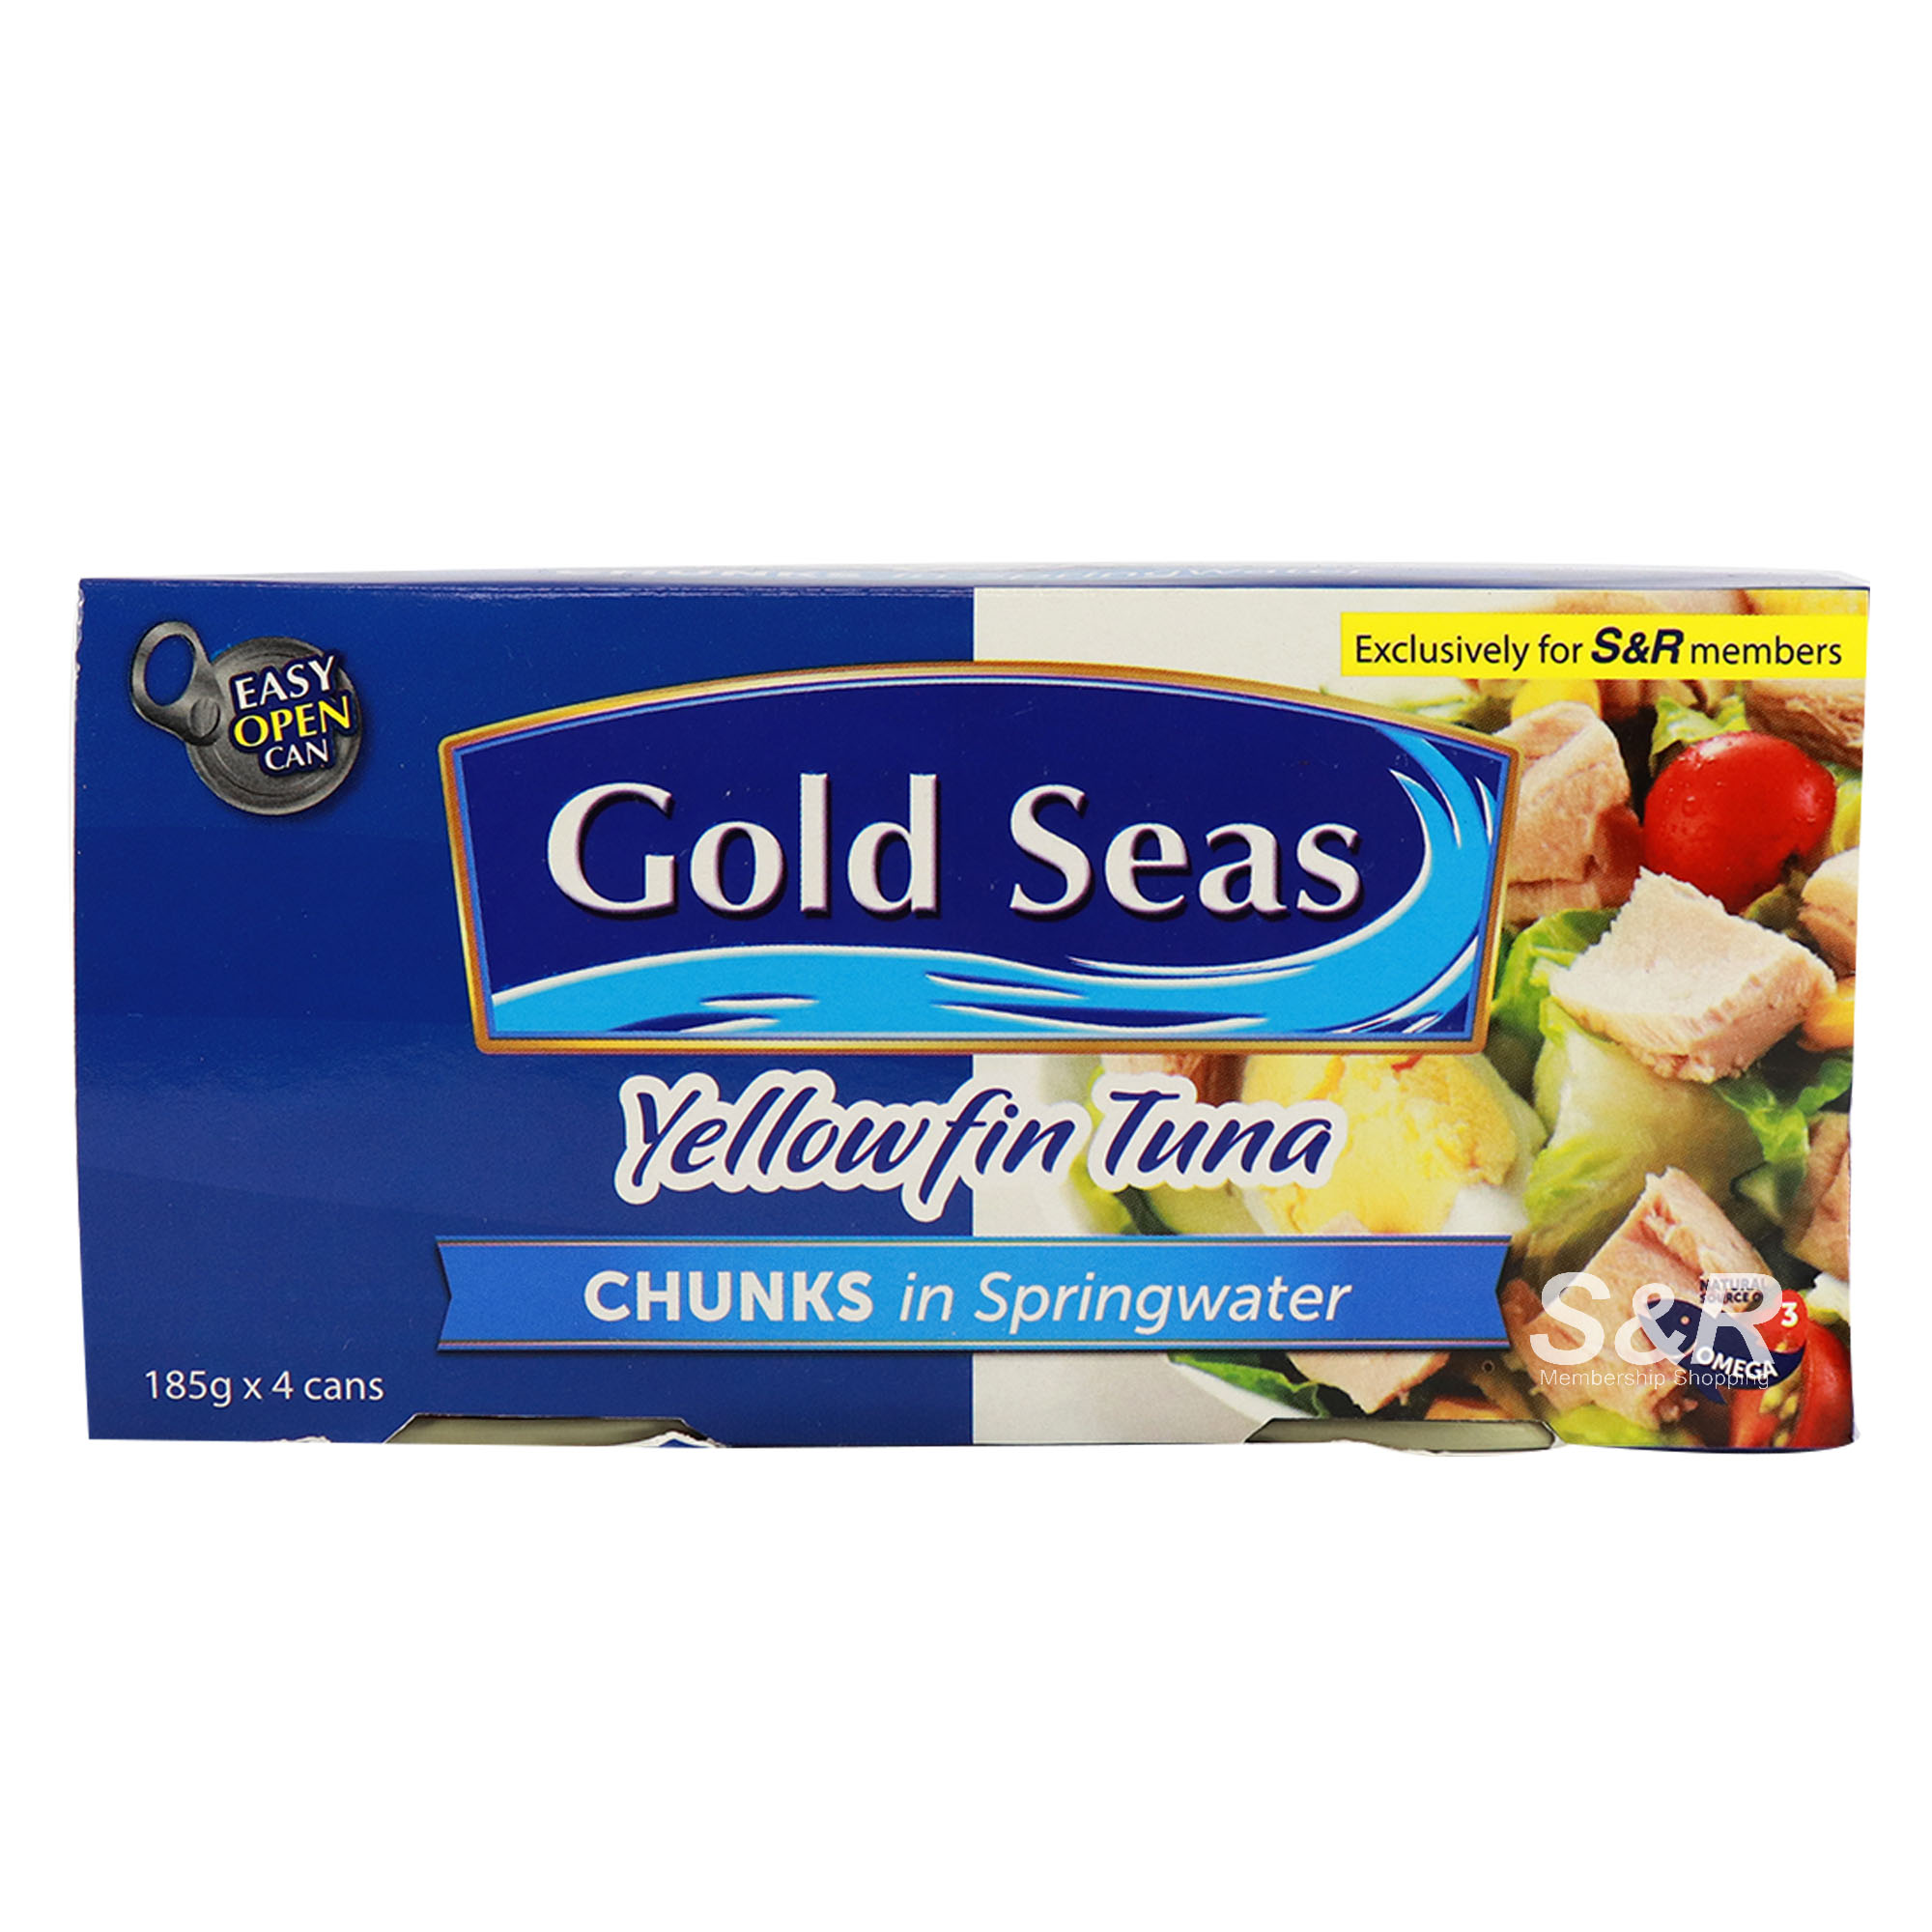 Gold Seas Yellowfin Tuna Chunks in Springwater 4 cans